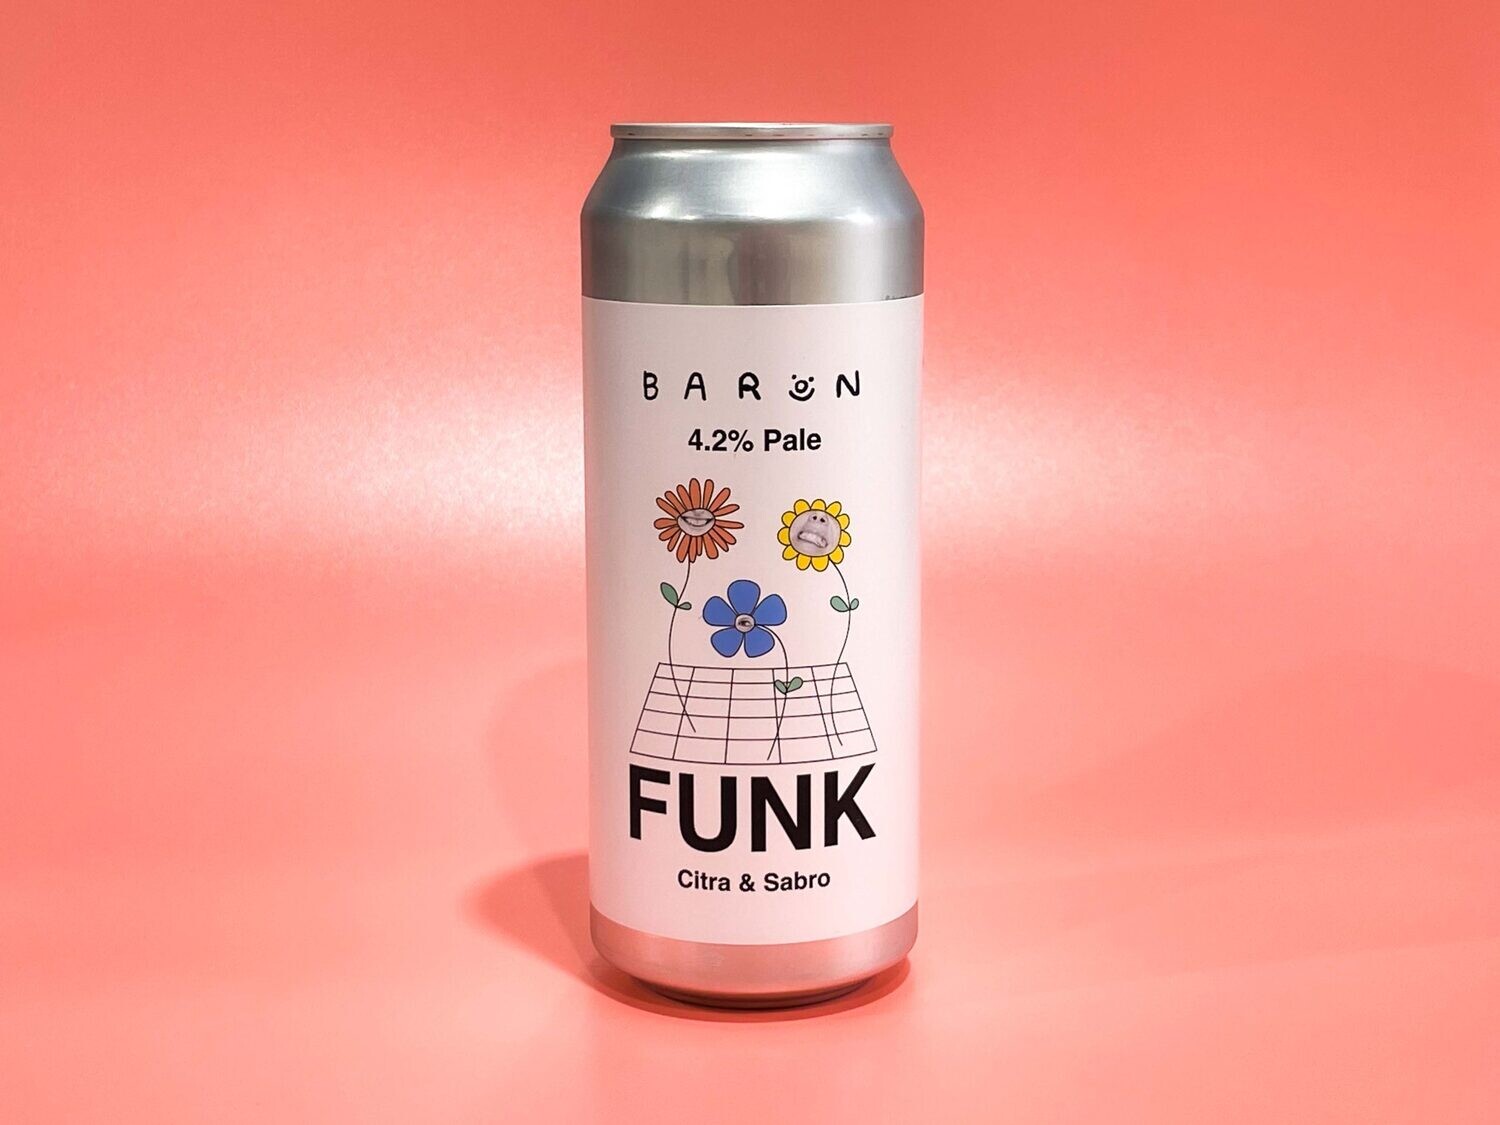 Baron Funk Pale Ale